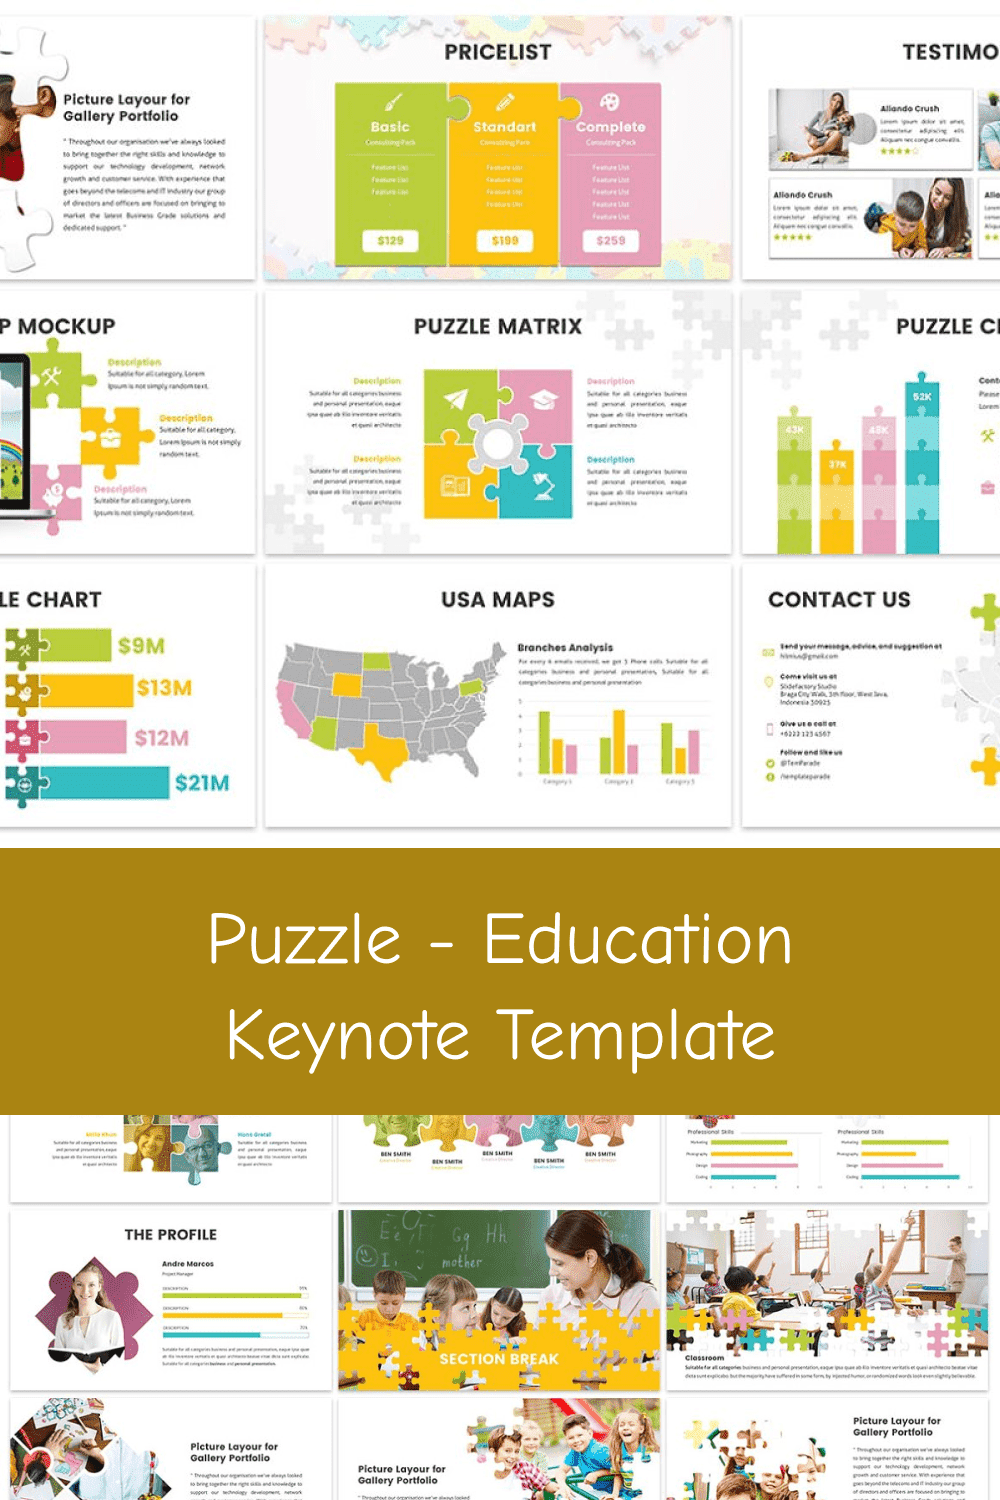 puzzle education keynote template pinterest image.